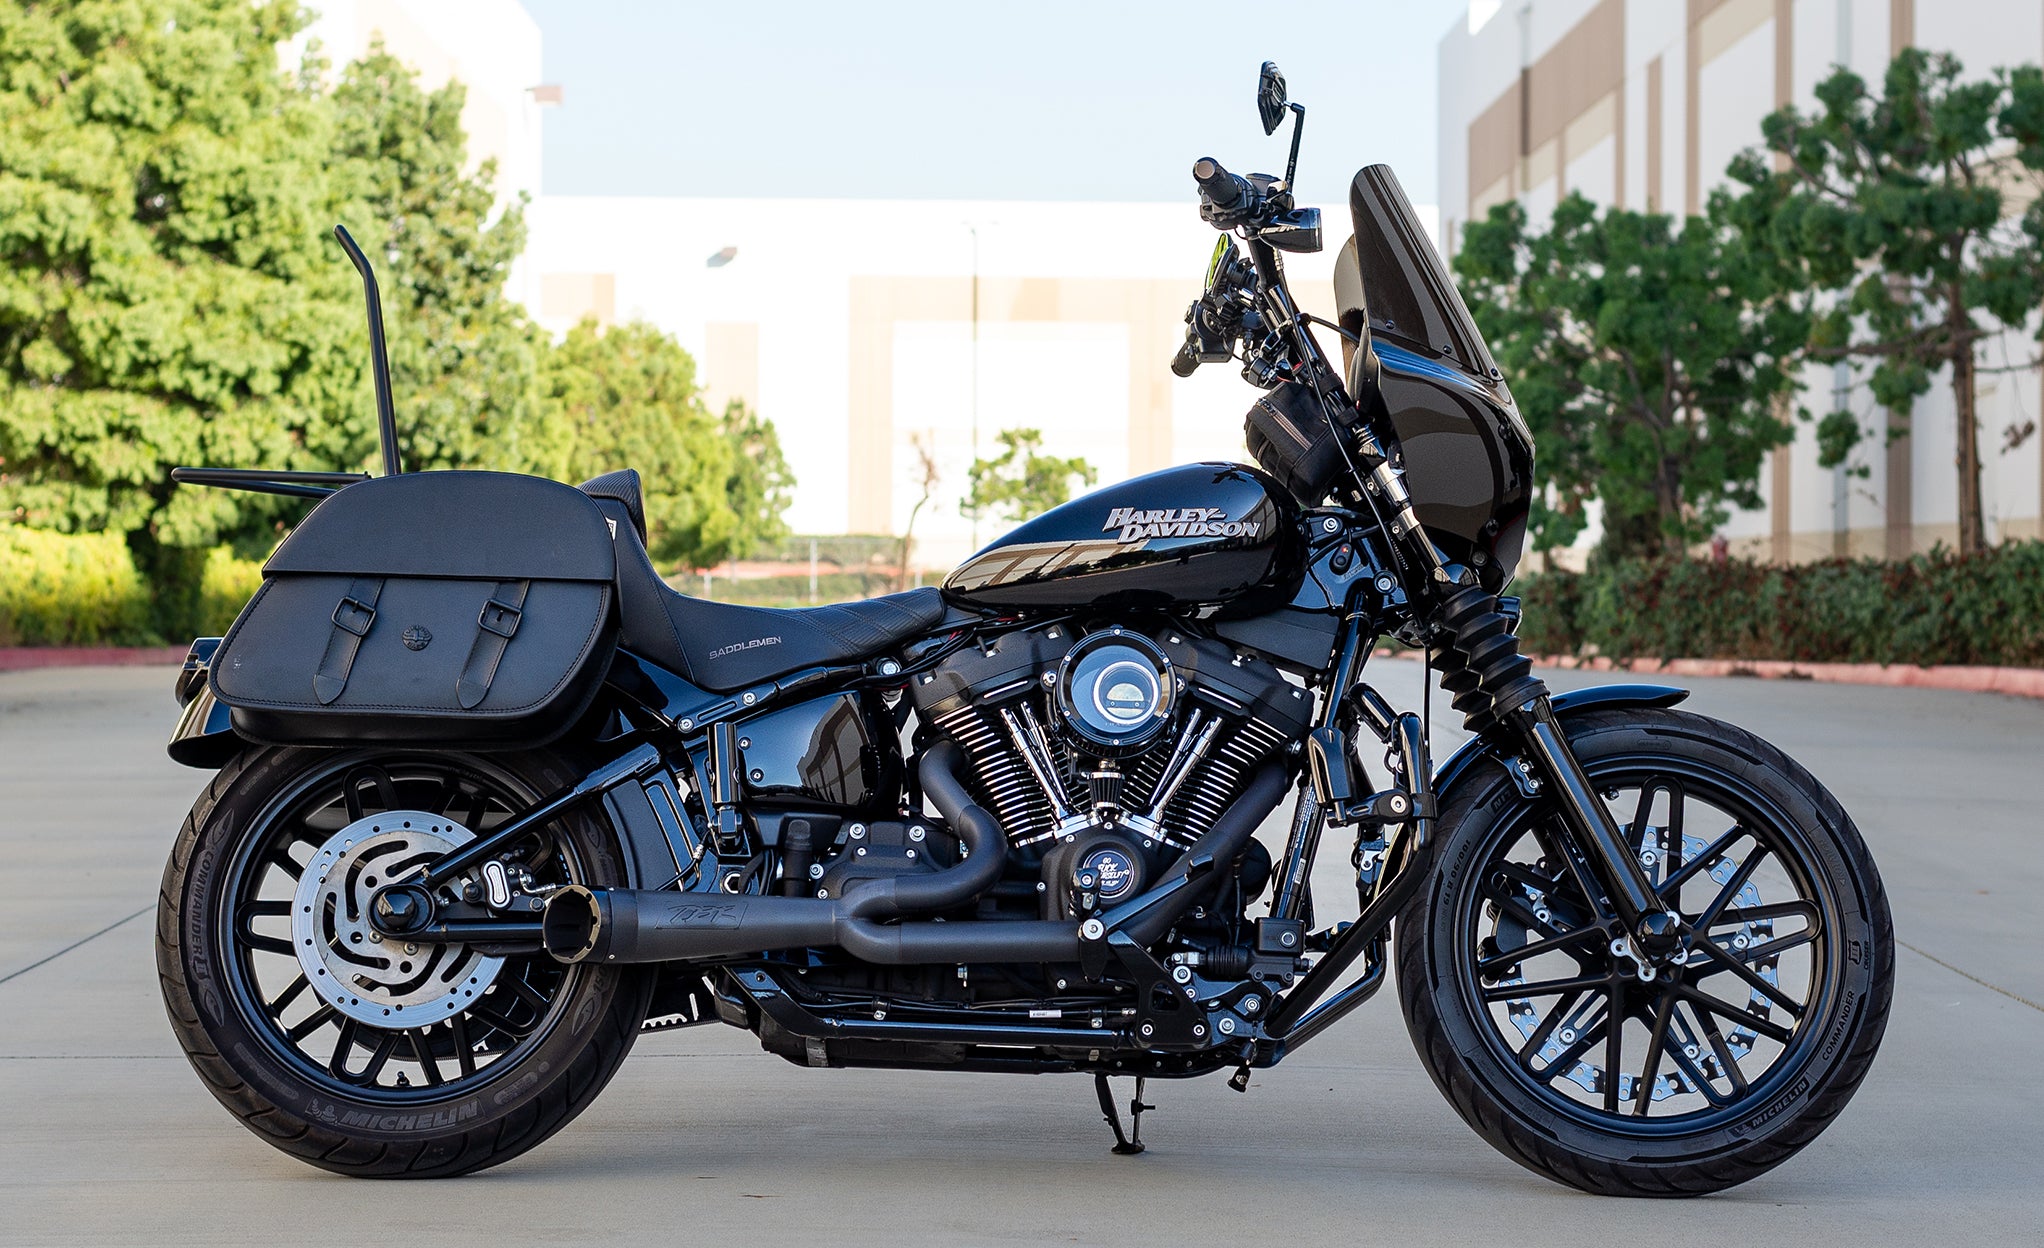 Viking Baelor Large Leather Motorcycle Saddlebags For Harley Davidson Softail Street Bob Fxbb @expand